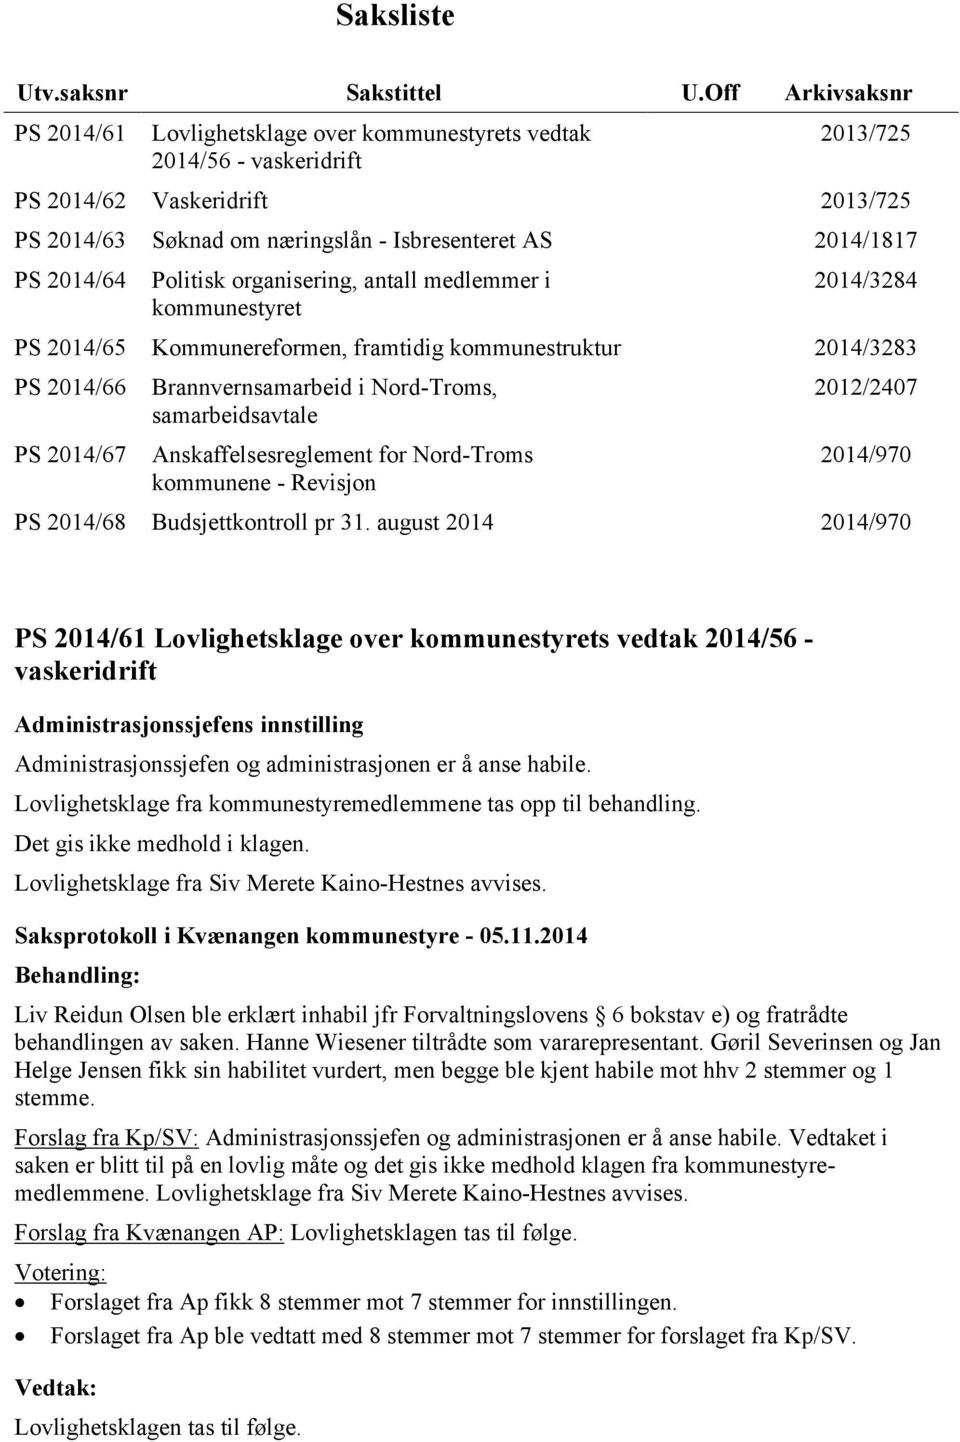 2014/64 Politisk organisering, antall medlemmer i kommunestyret 2014/3284 PS 2014/65 Kommunereformen, framtidig kommunestruktur 2014/3283 PS 2014/66 PS 2014/67 Brannvernsamarbeid i Nord-Troms,